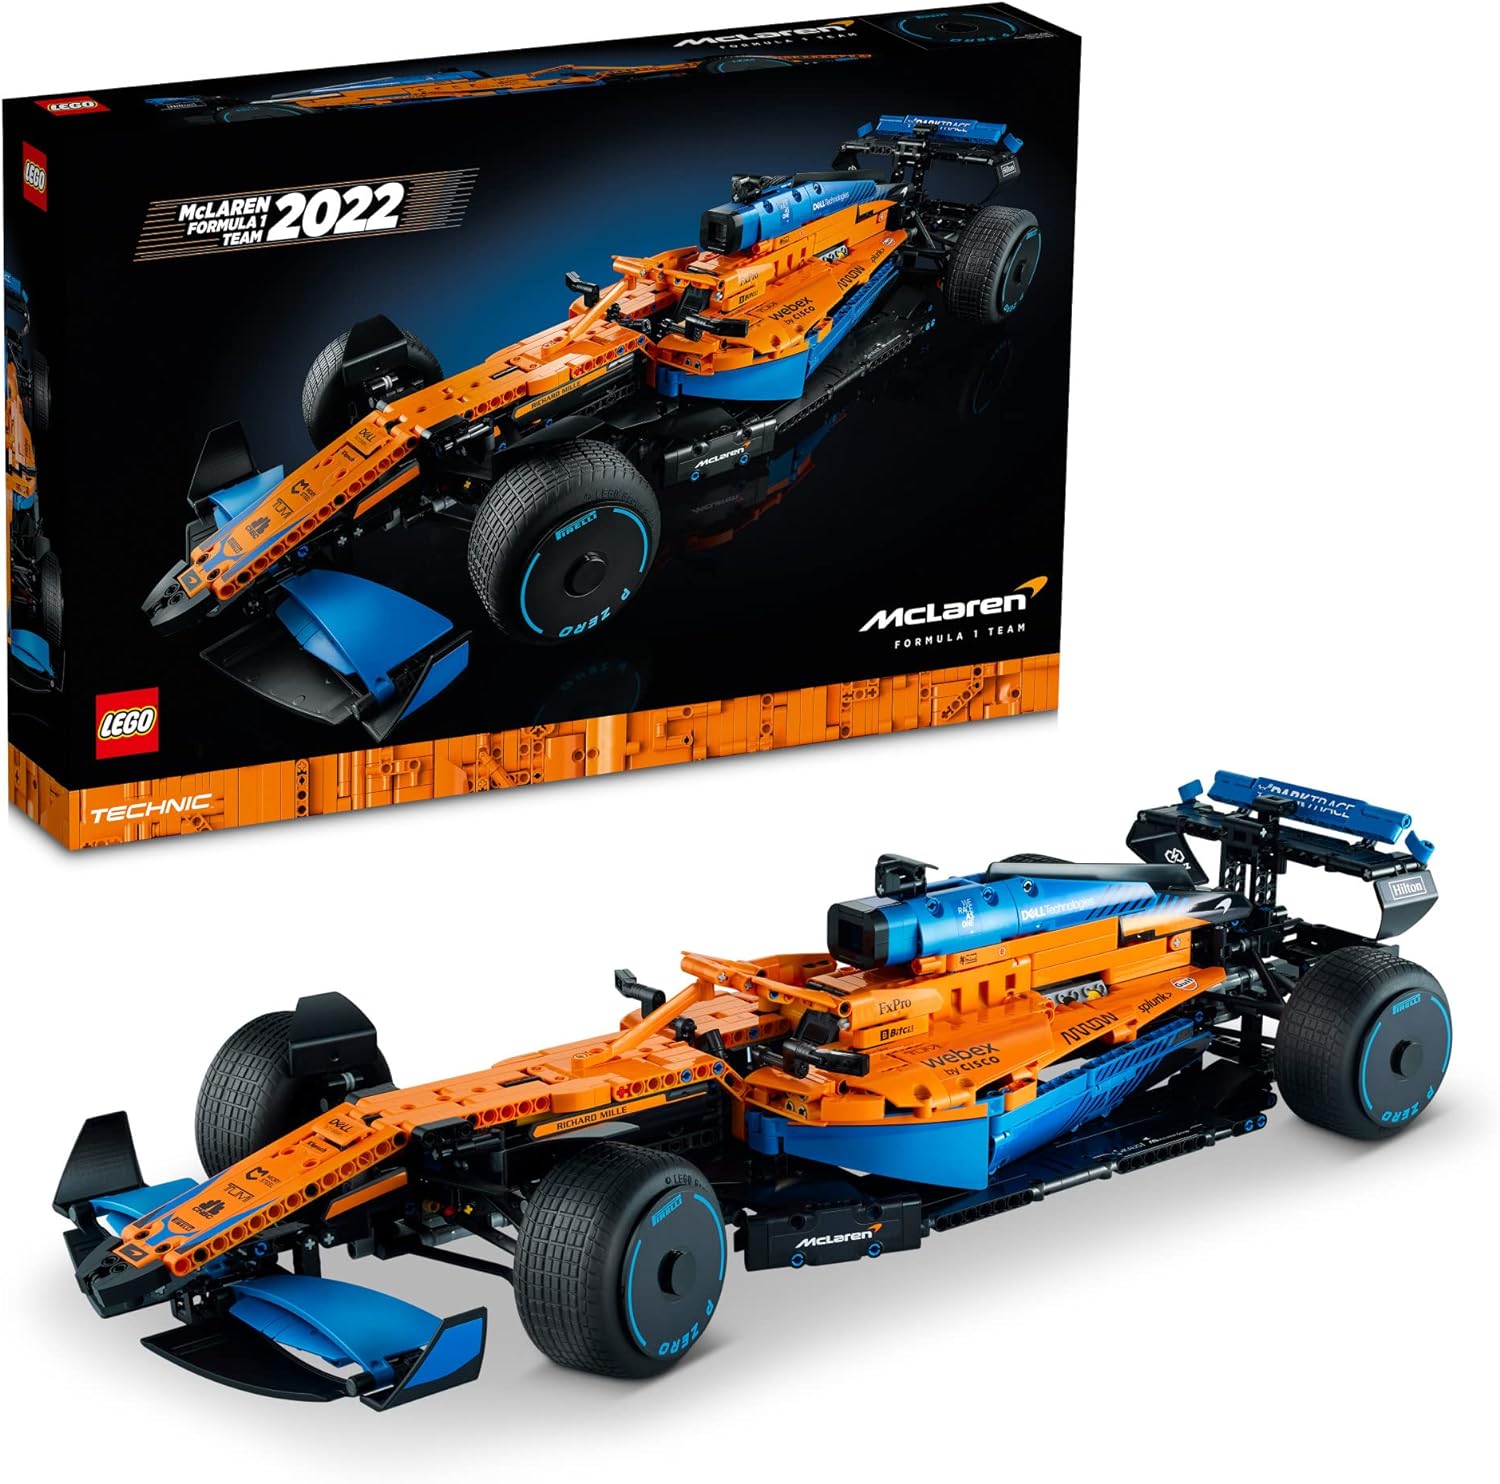 McLaren Formula  Race Car